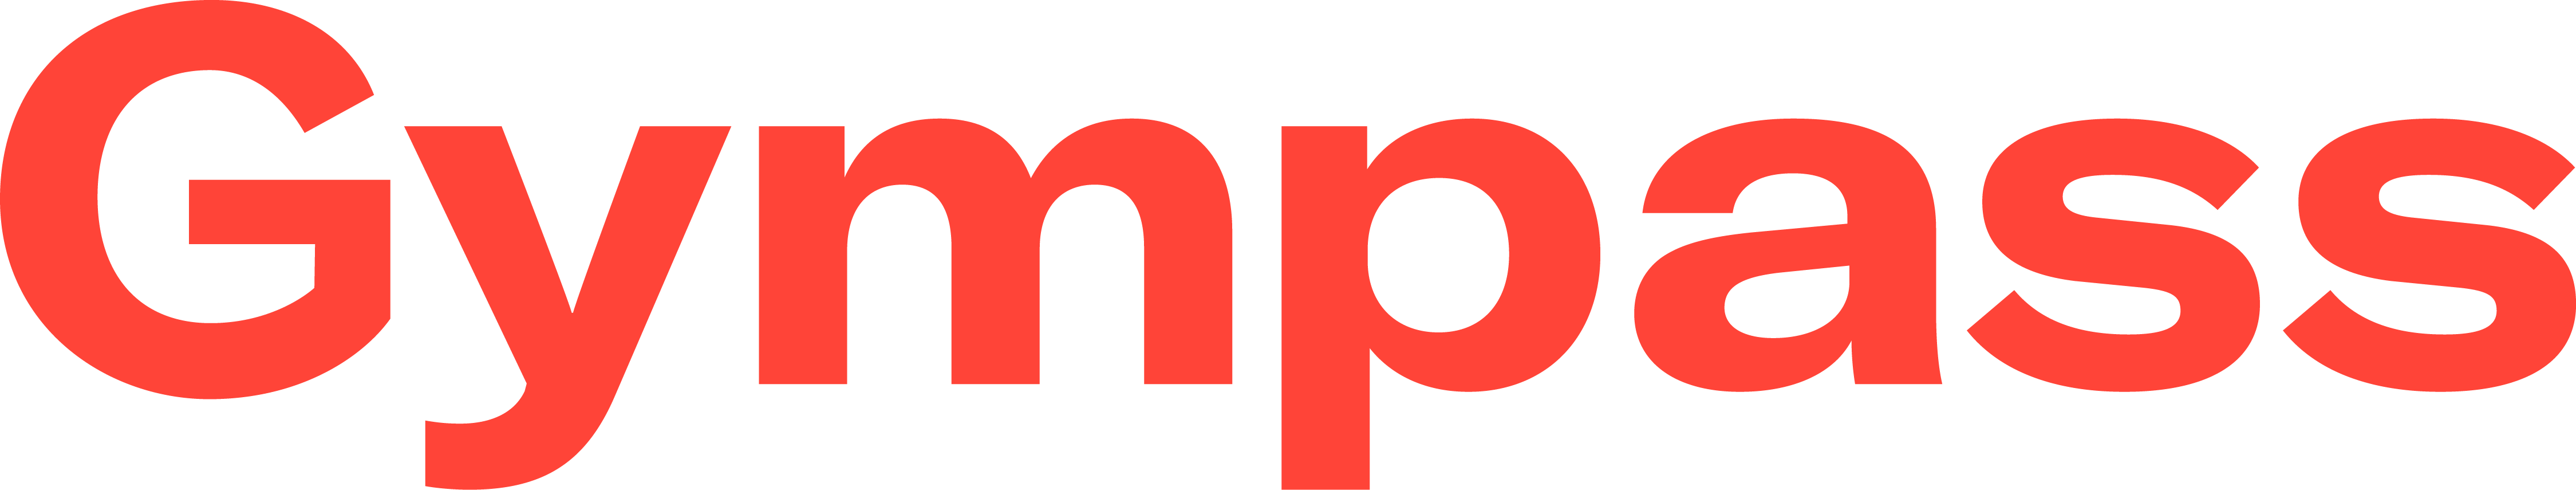 gp-logo-red